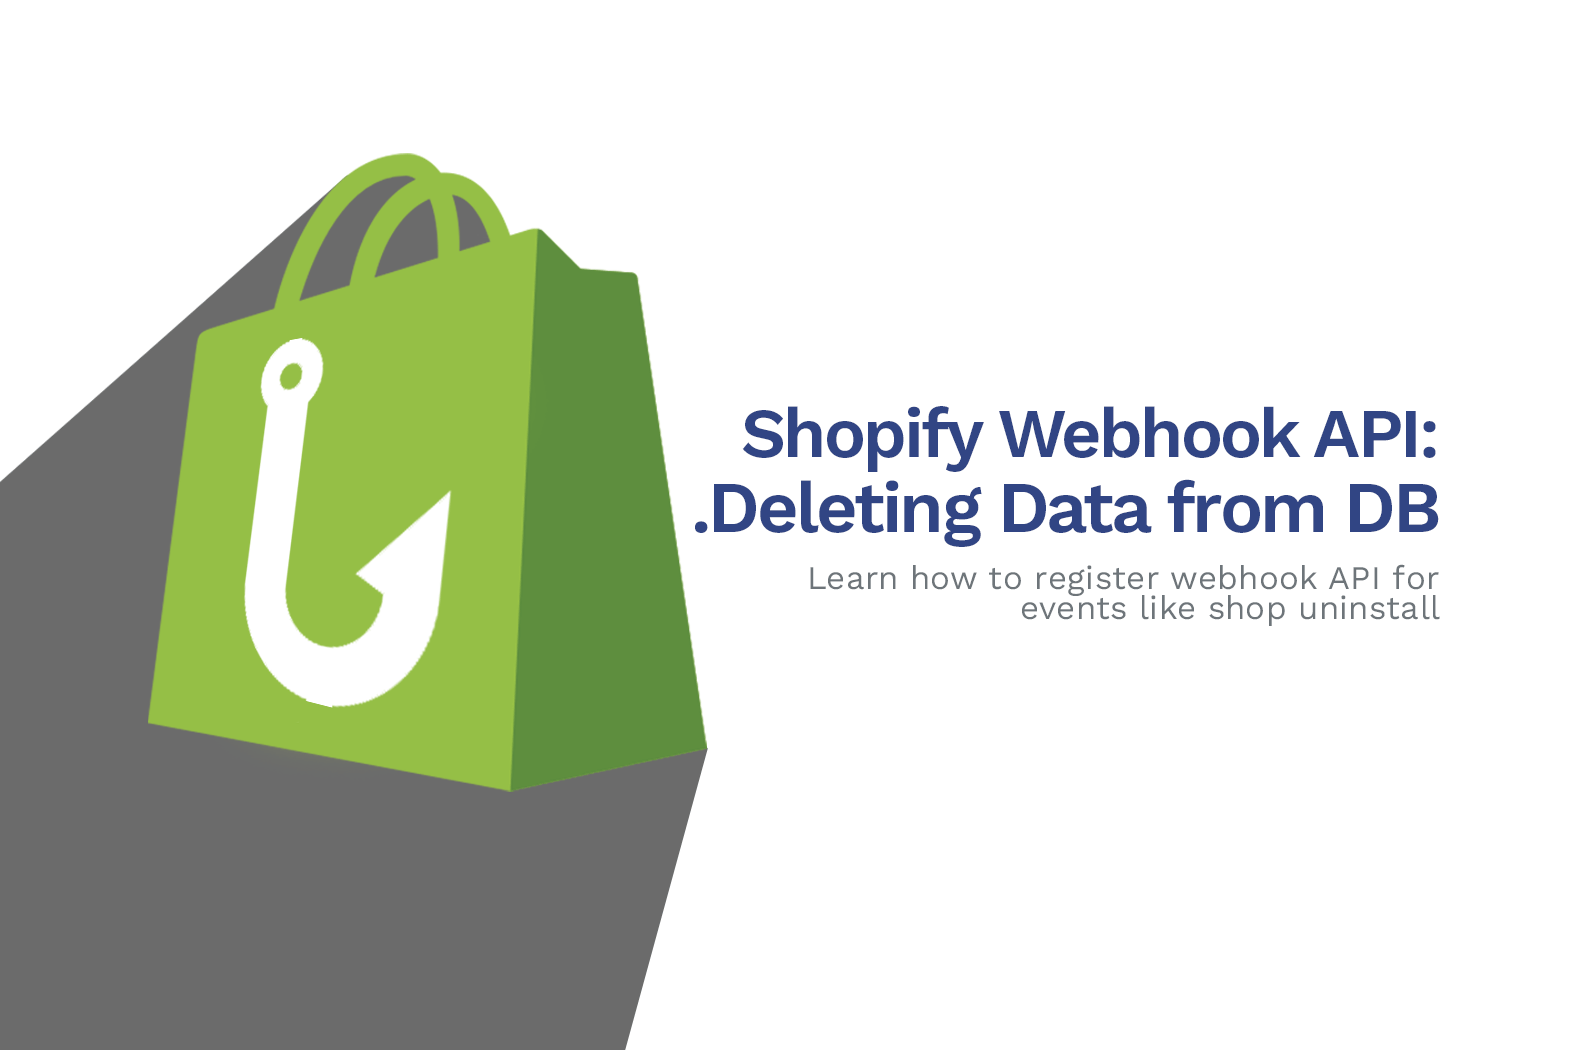 Shopify Webhook API Tutorial: How To Delete Data on Uninstall